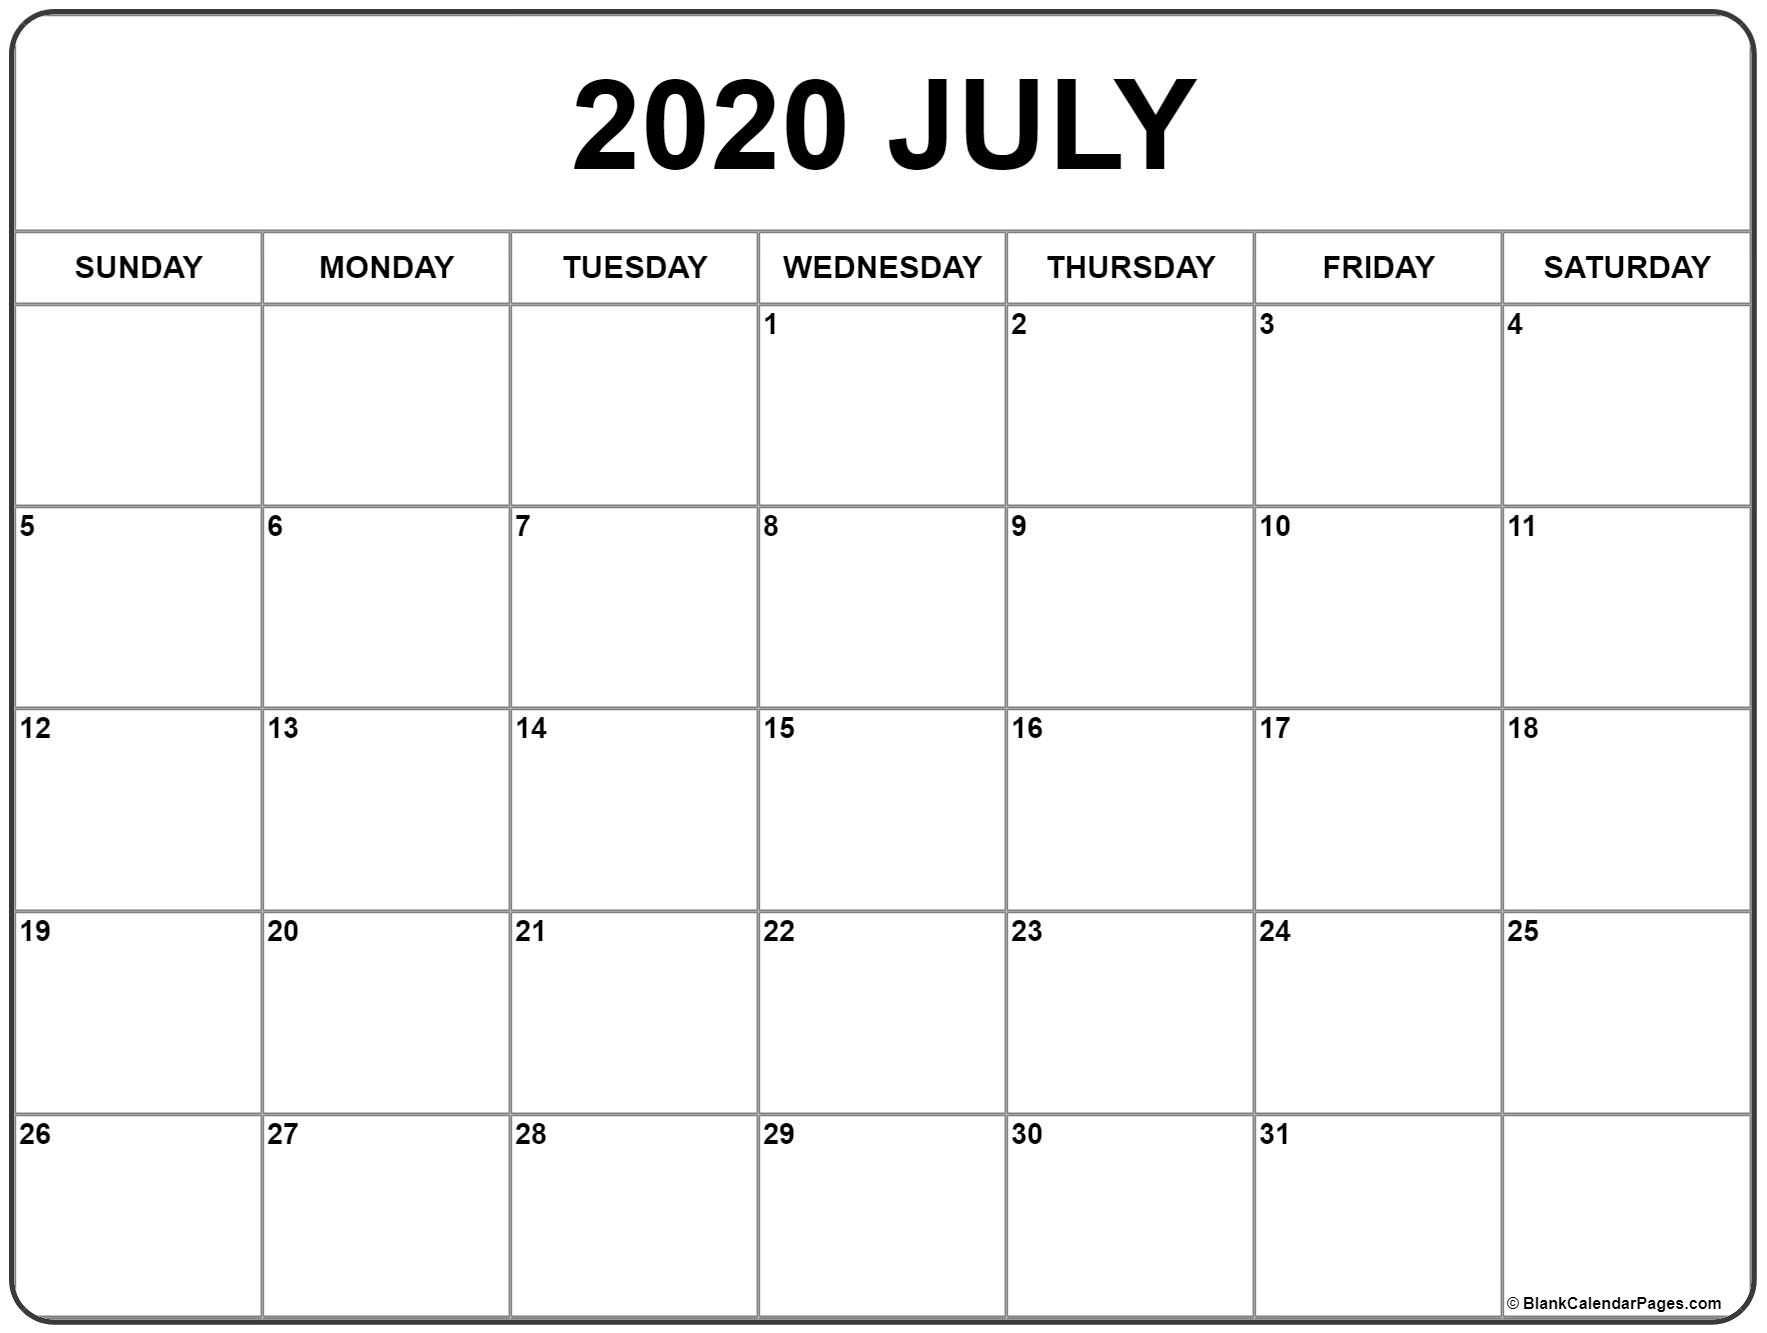 Calendar For 2020 July - Wpa.wpart.co